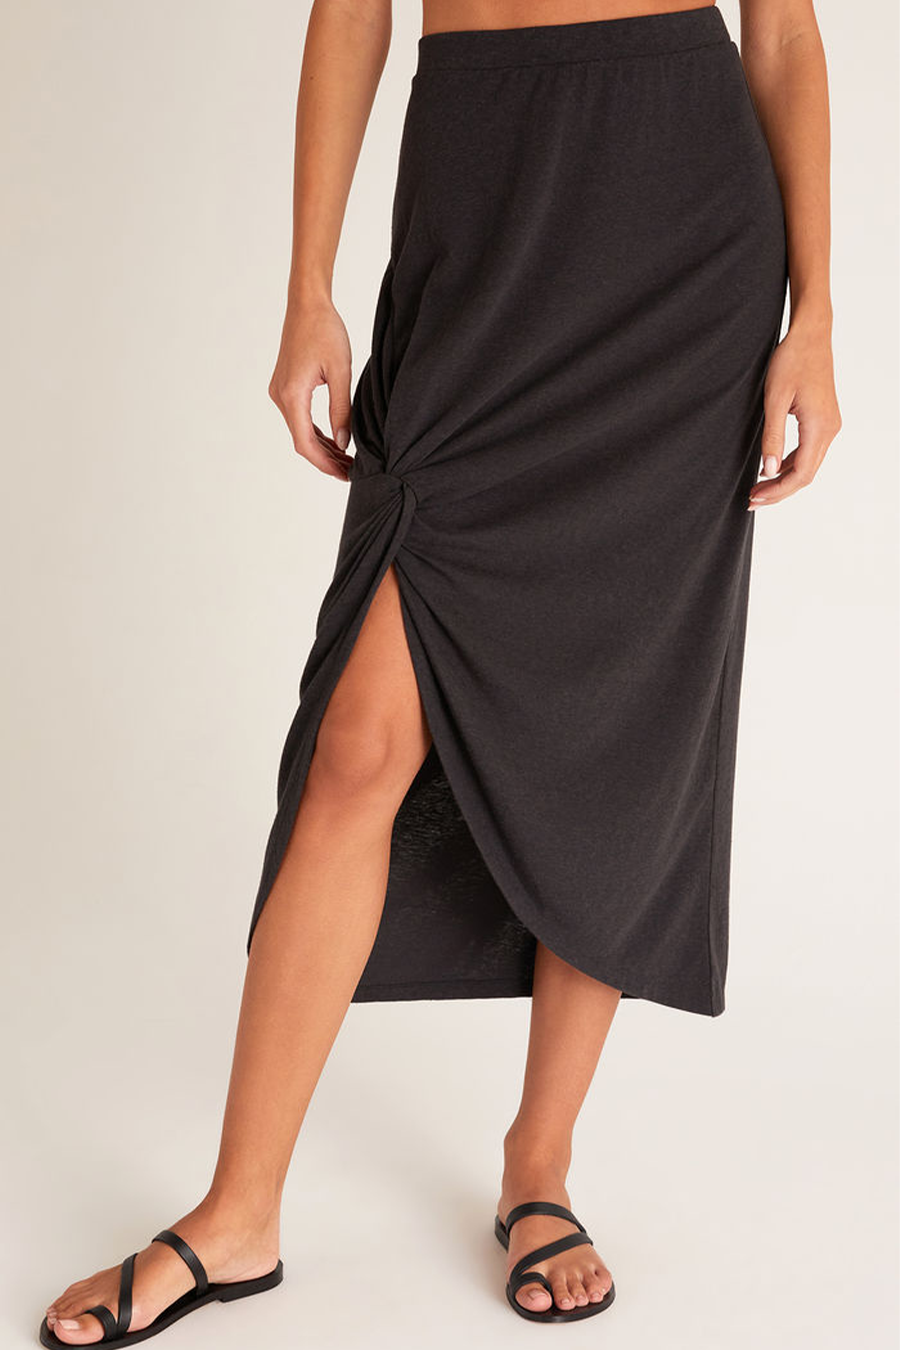 Sabina Triblend Knot Skirt | Black - Main Image Number 1 of 1